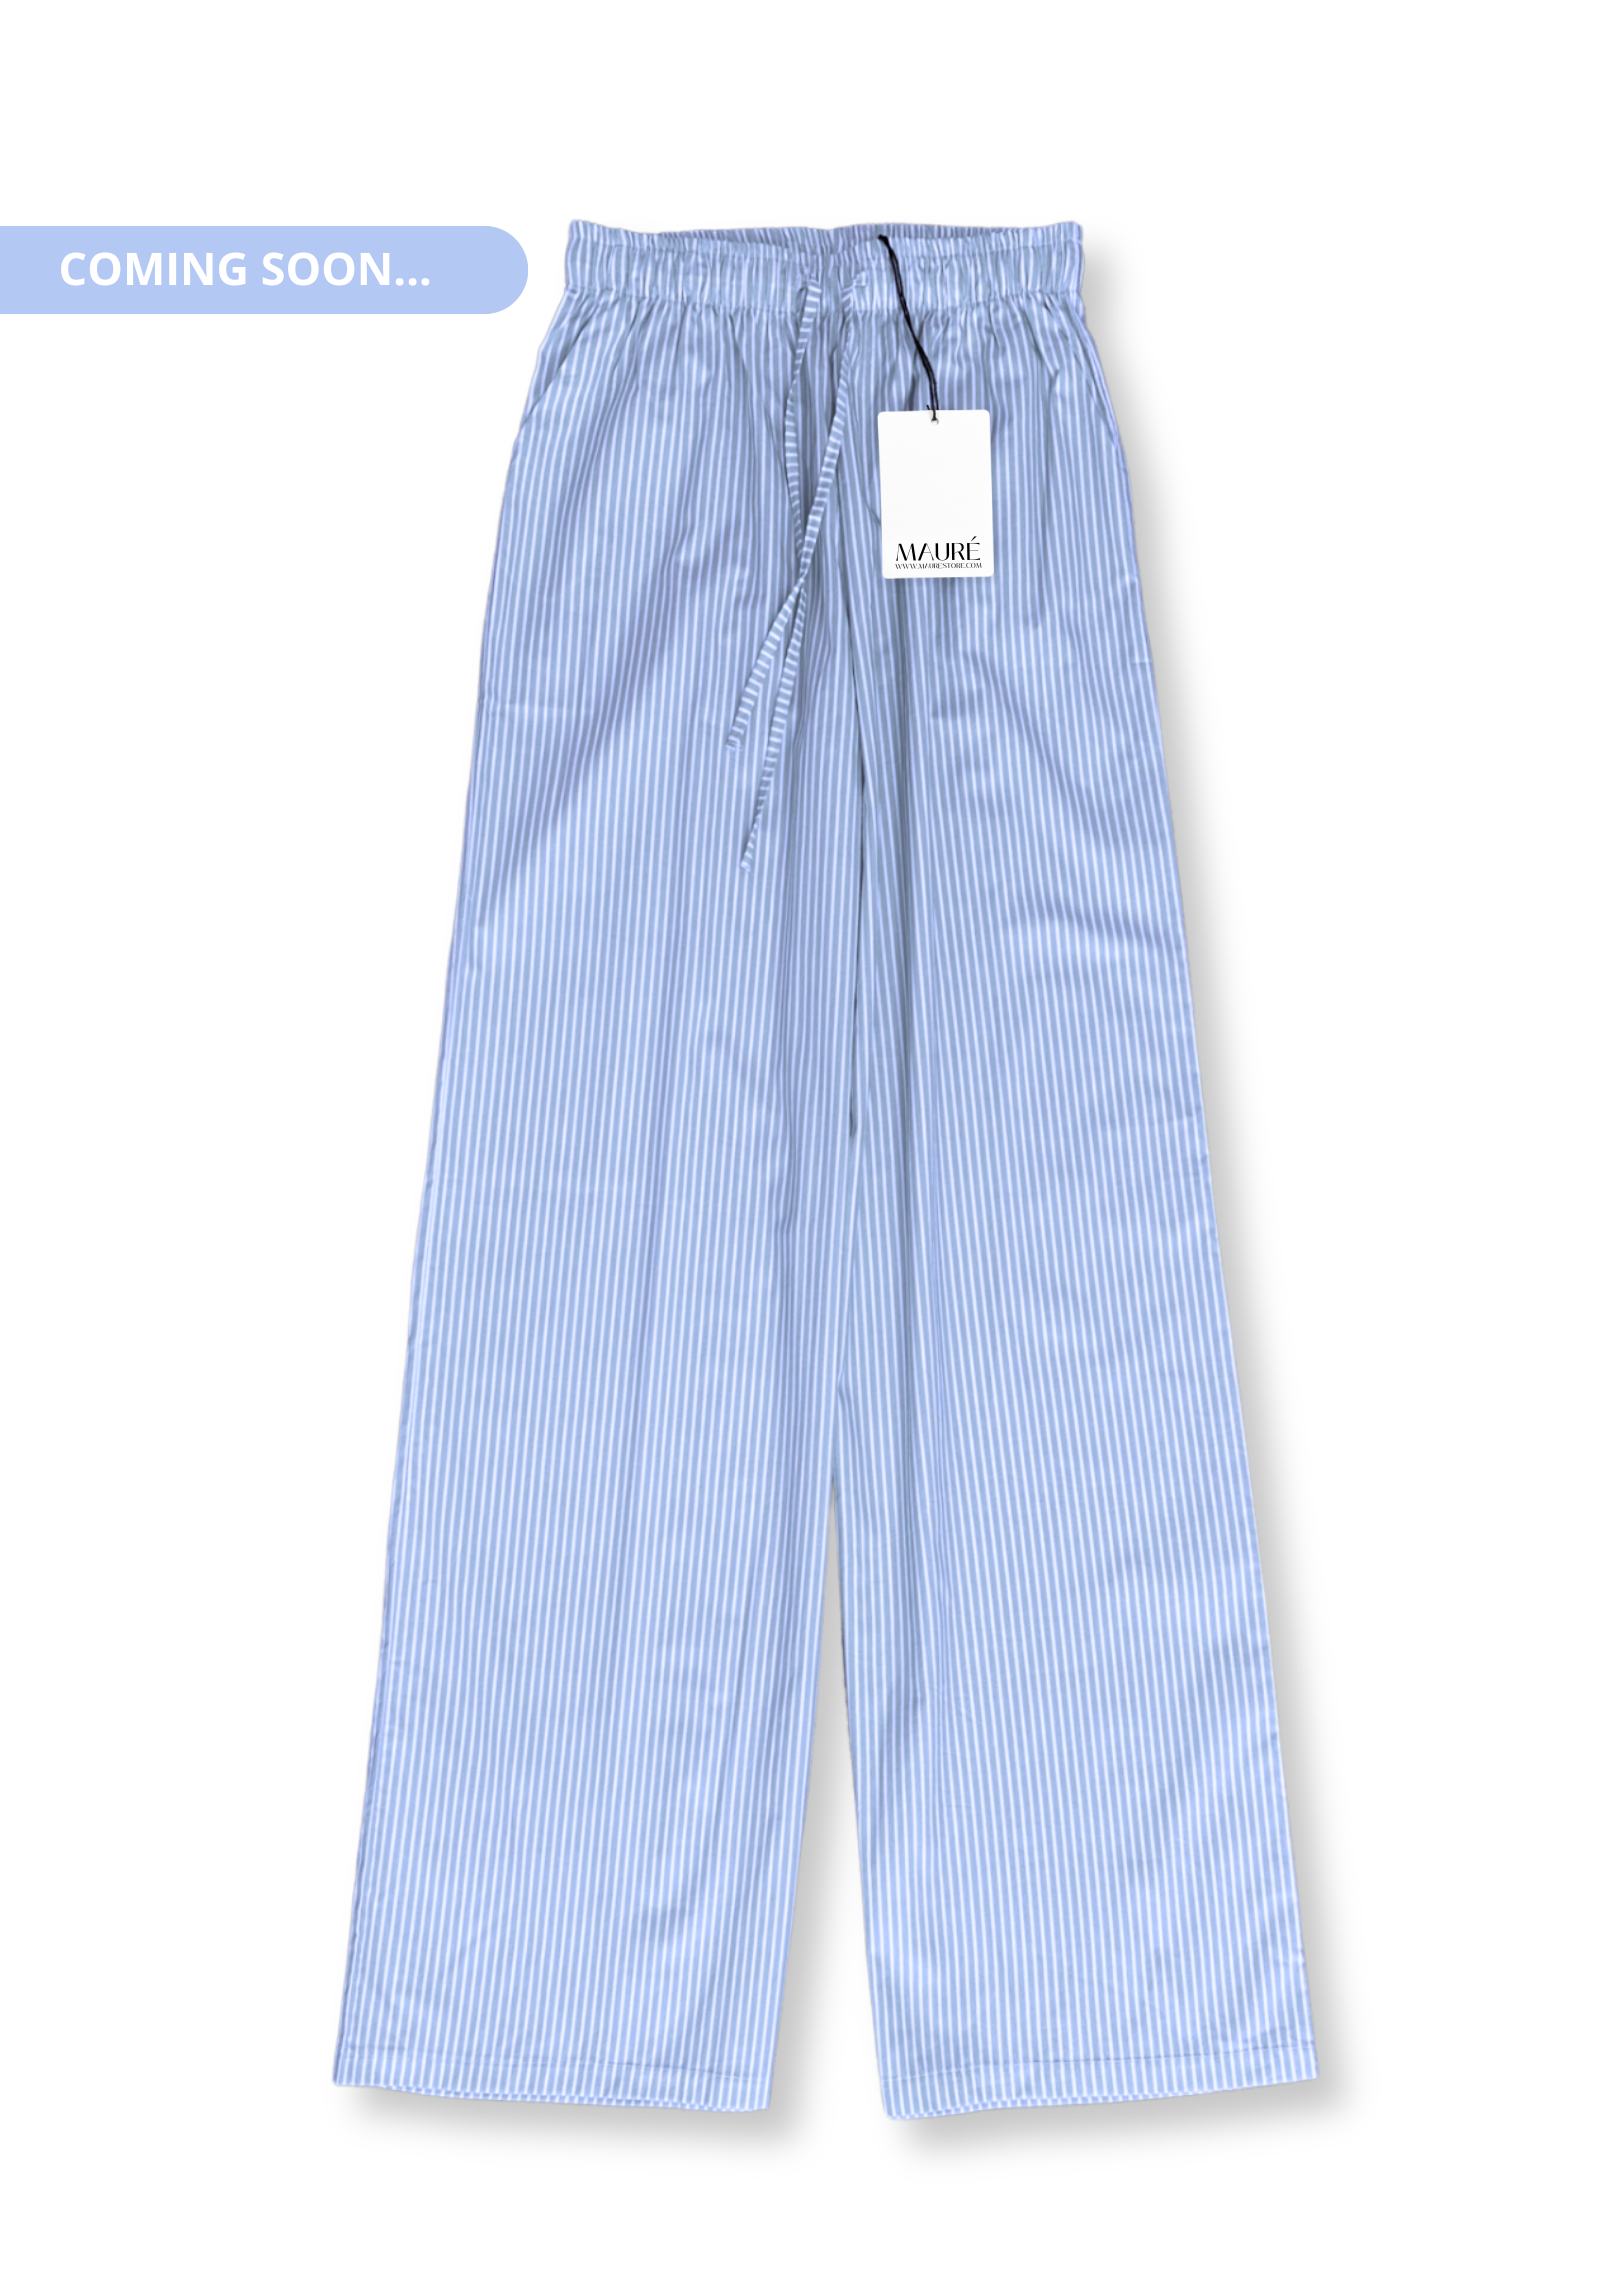 Cotton pants striped (TALL) blue/white